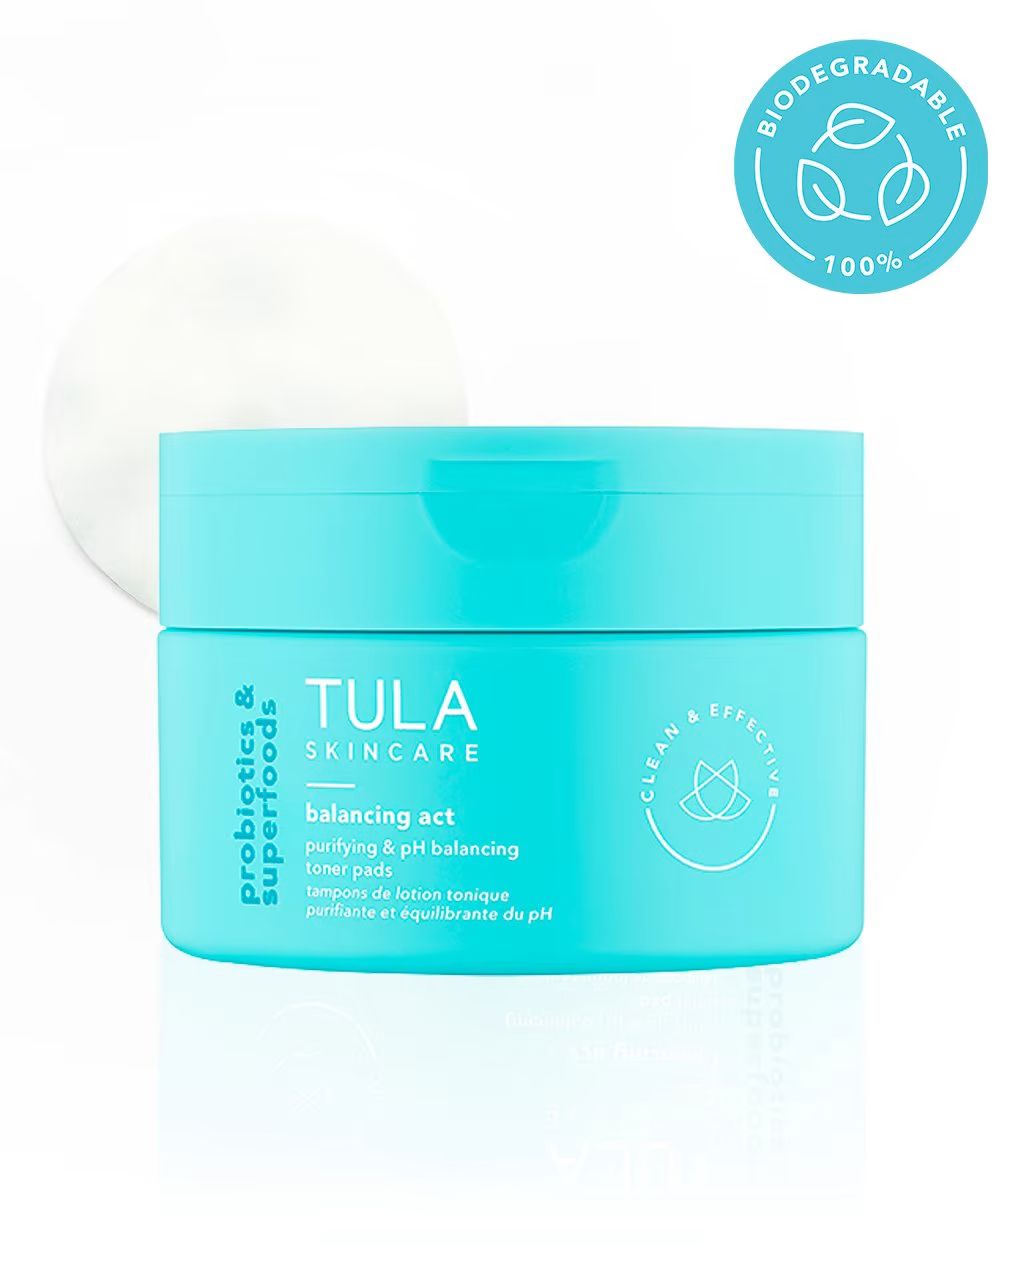 purifying & pH balancing biodegradable toner pads | Tula Skincare